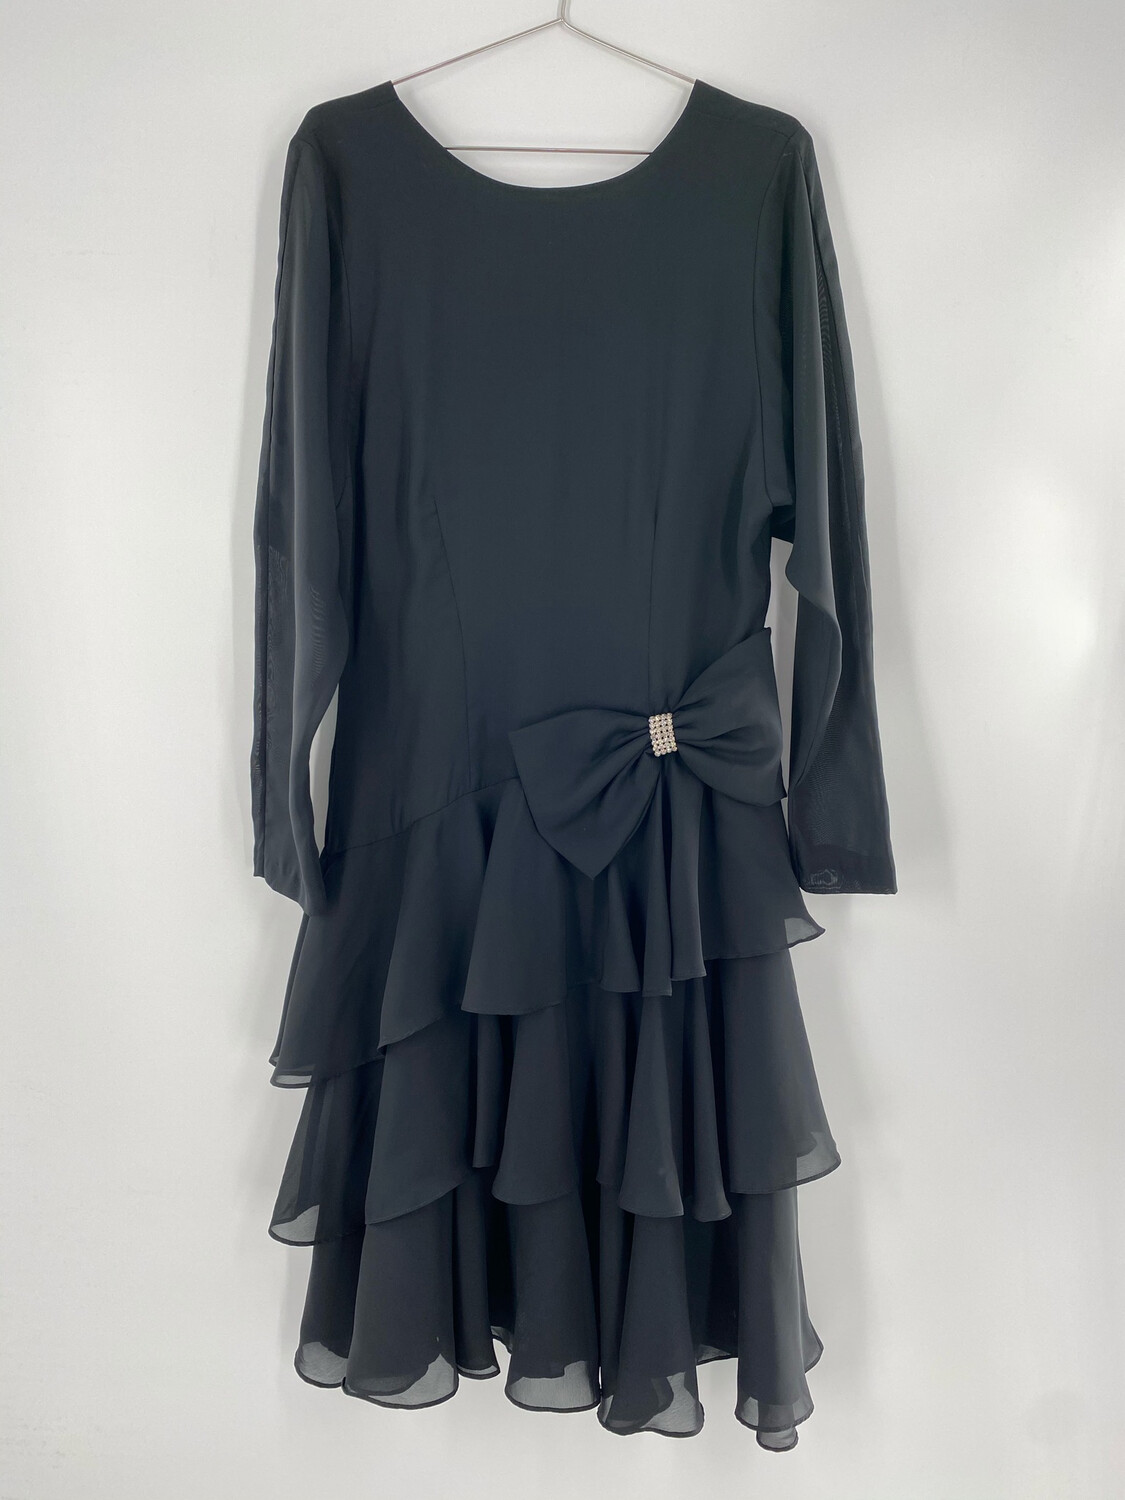 Samantha Black Long Sleeve Ruffle Dress Size M